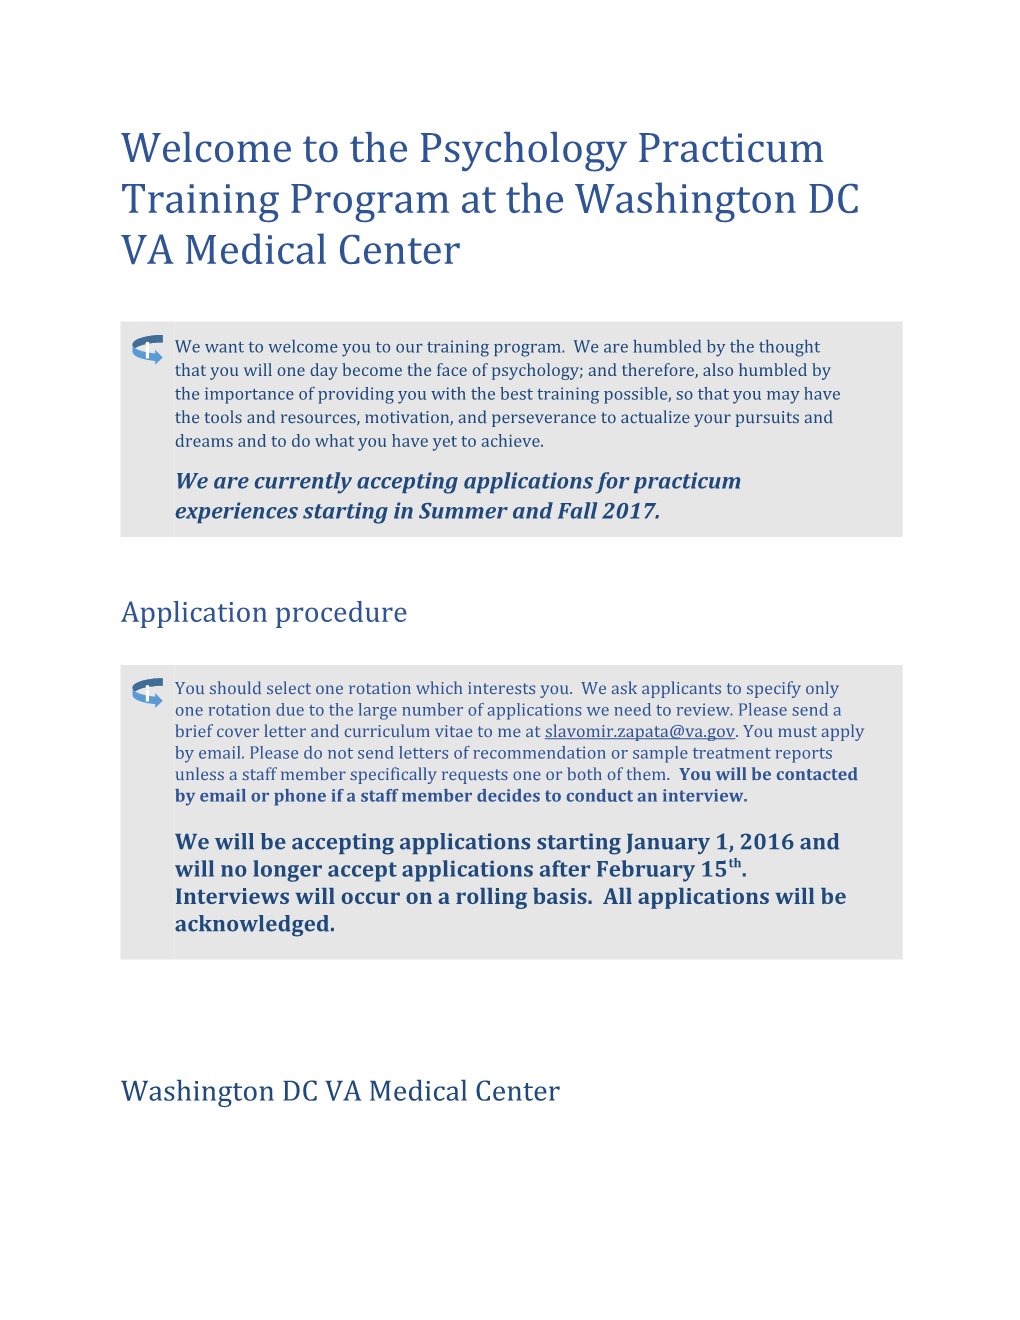 Welcome to the Psychology Practicum Training Program at the Washington DC VA Medical Center